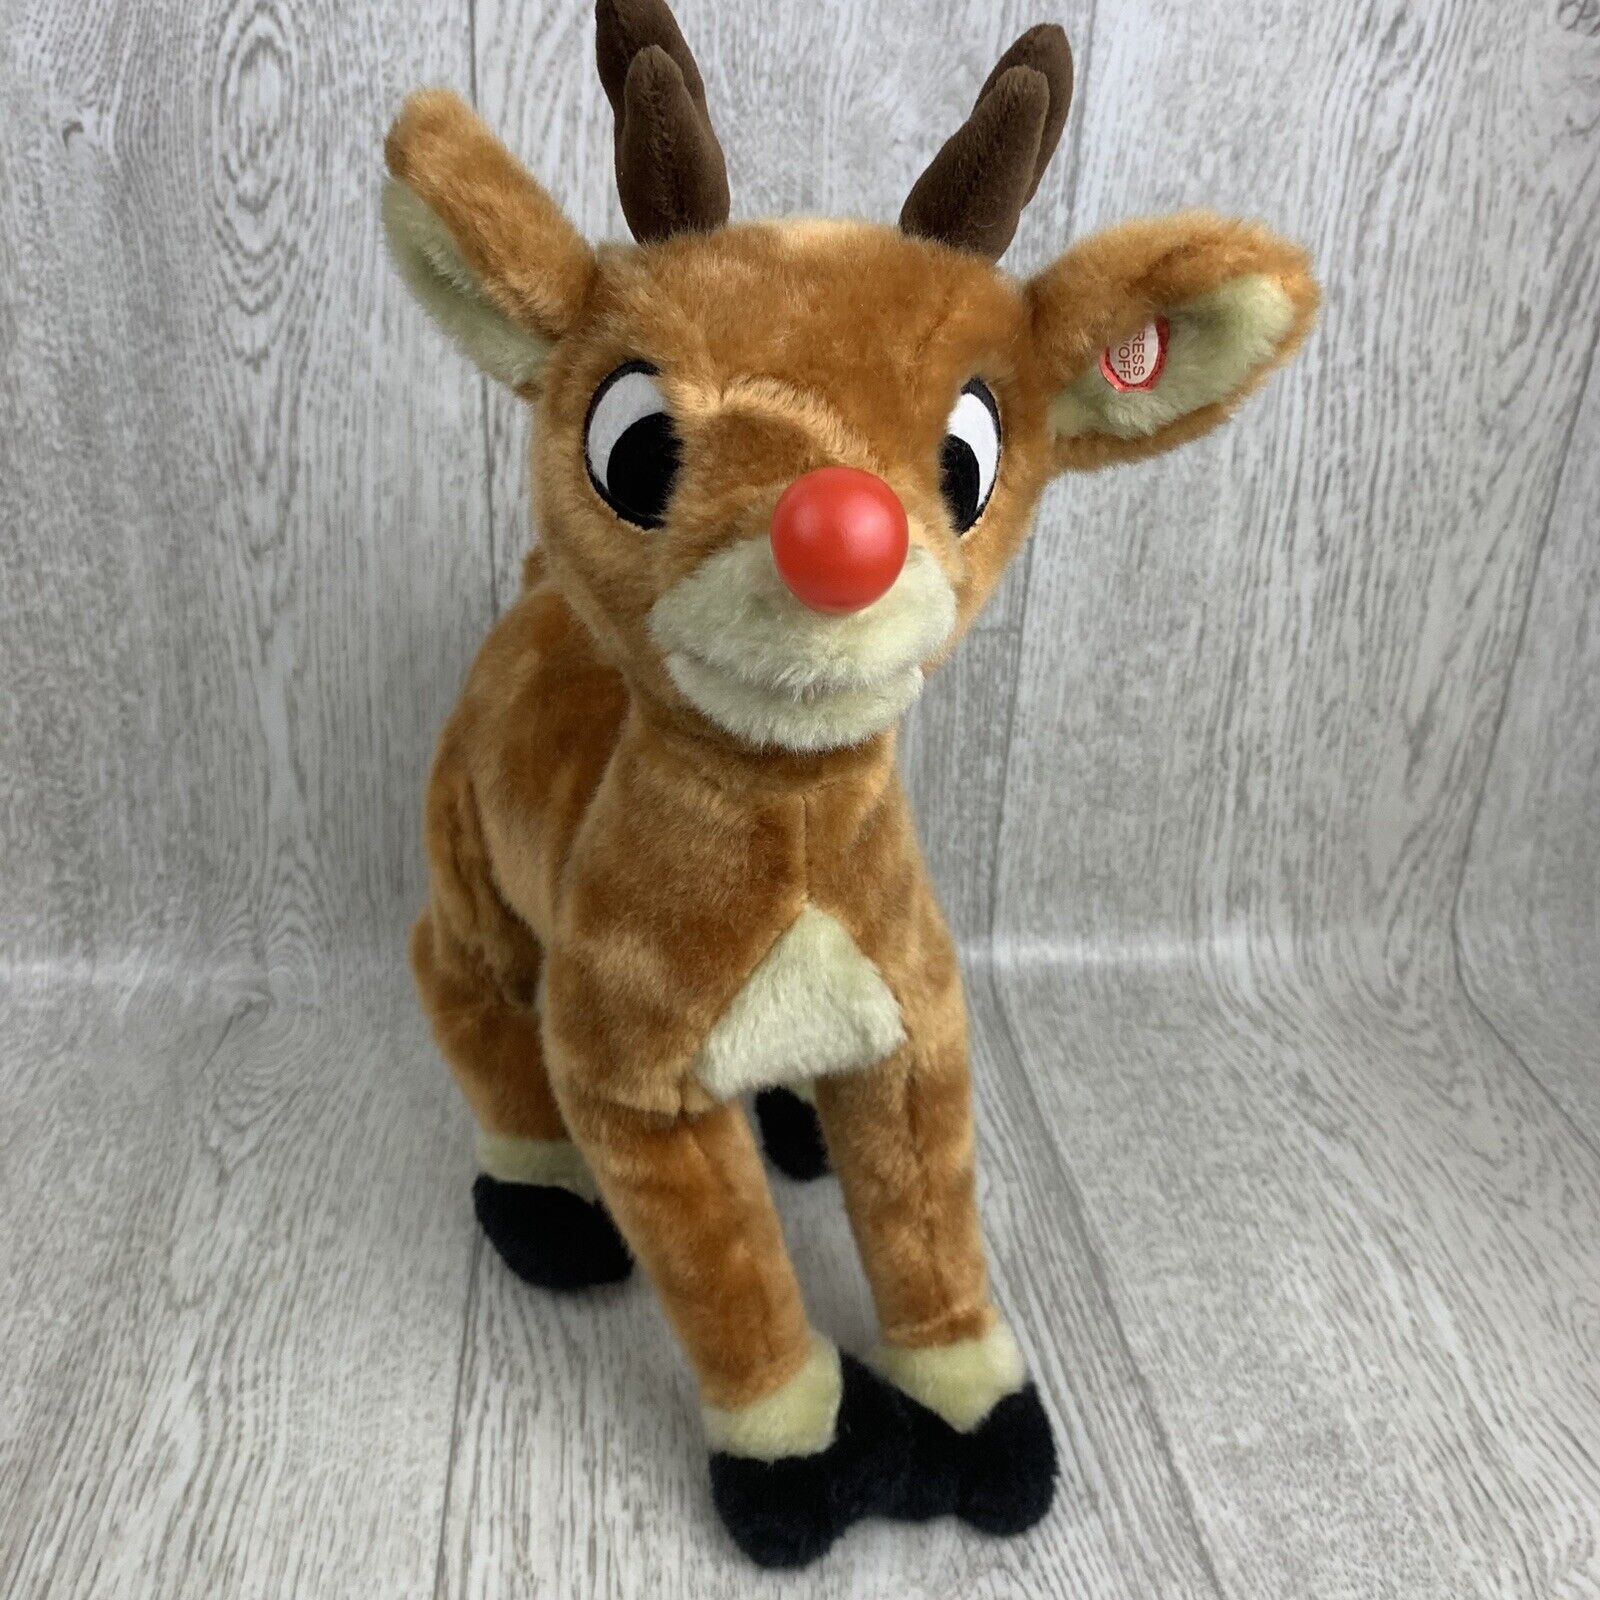 Vintage Gemmy Animated Rudolph The Red Nose Reindeer Talks And Nose Lights Up